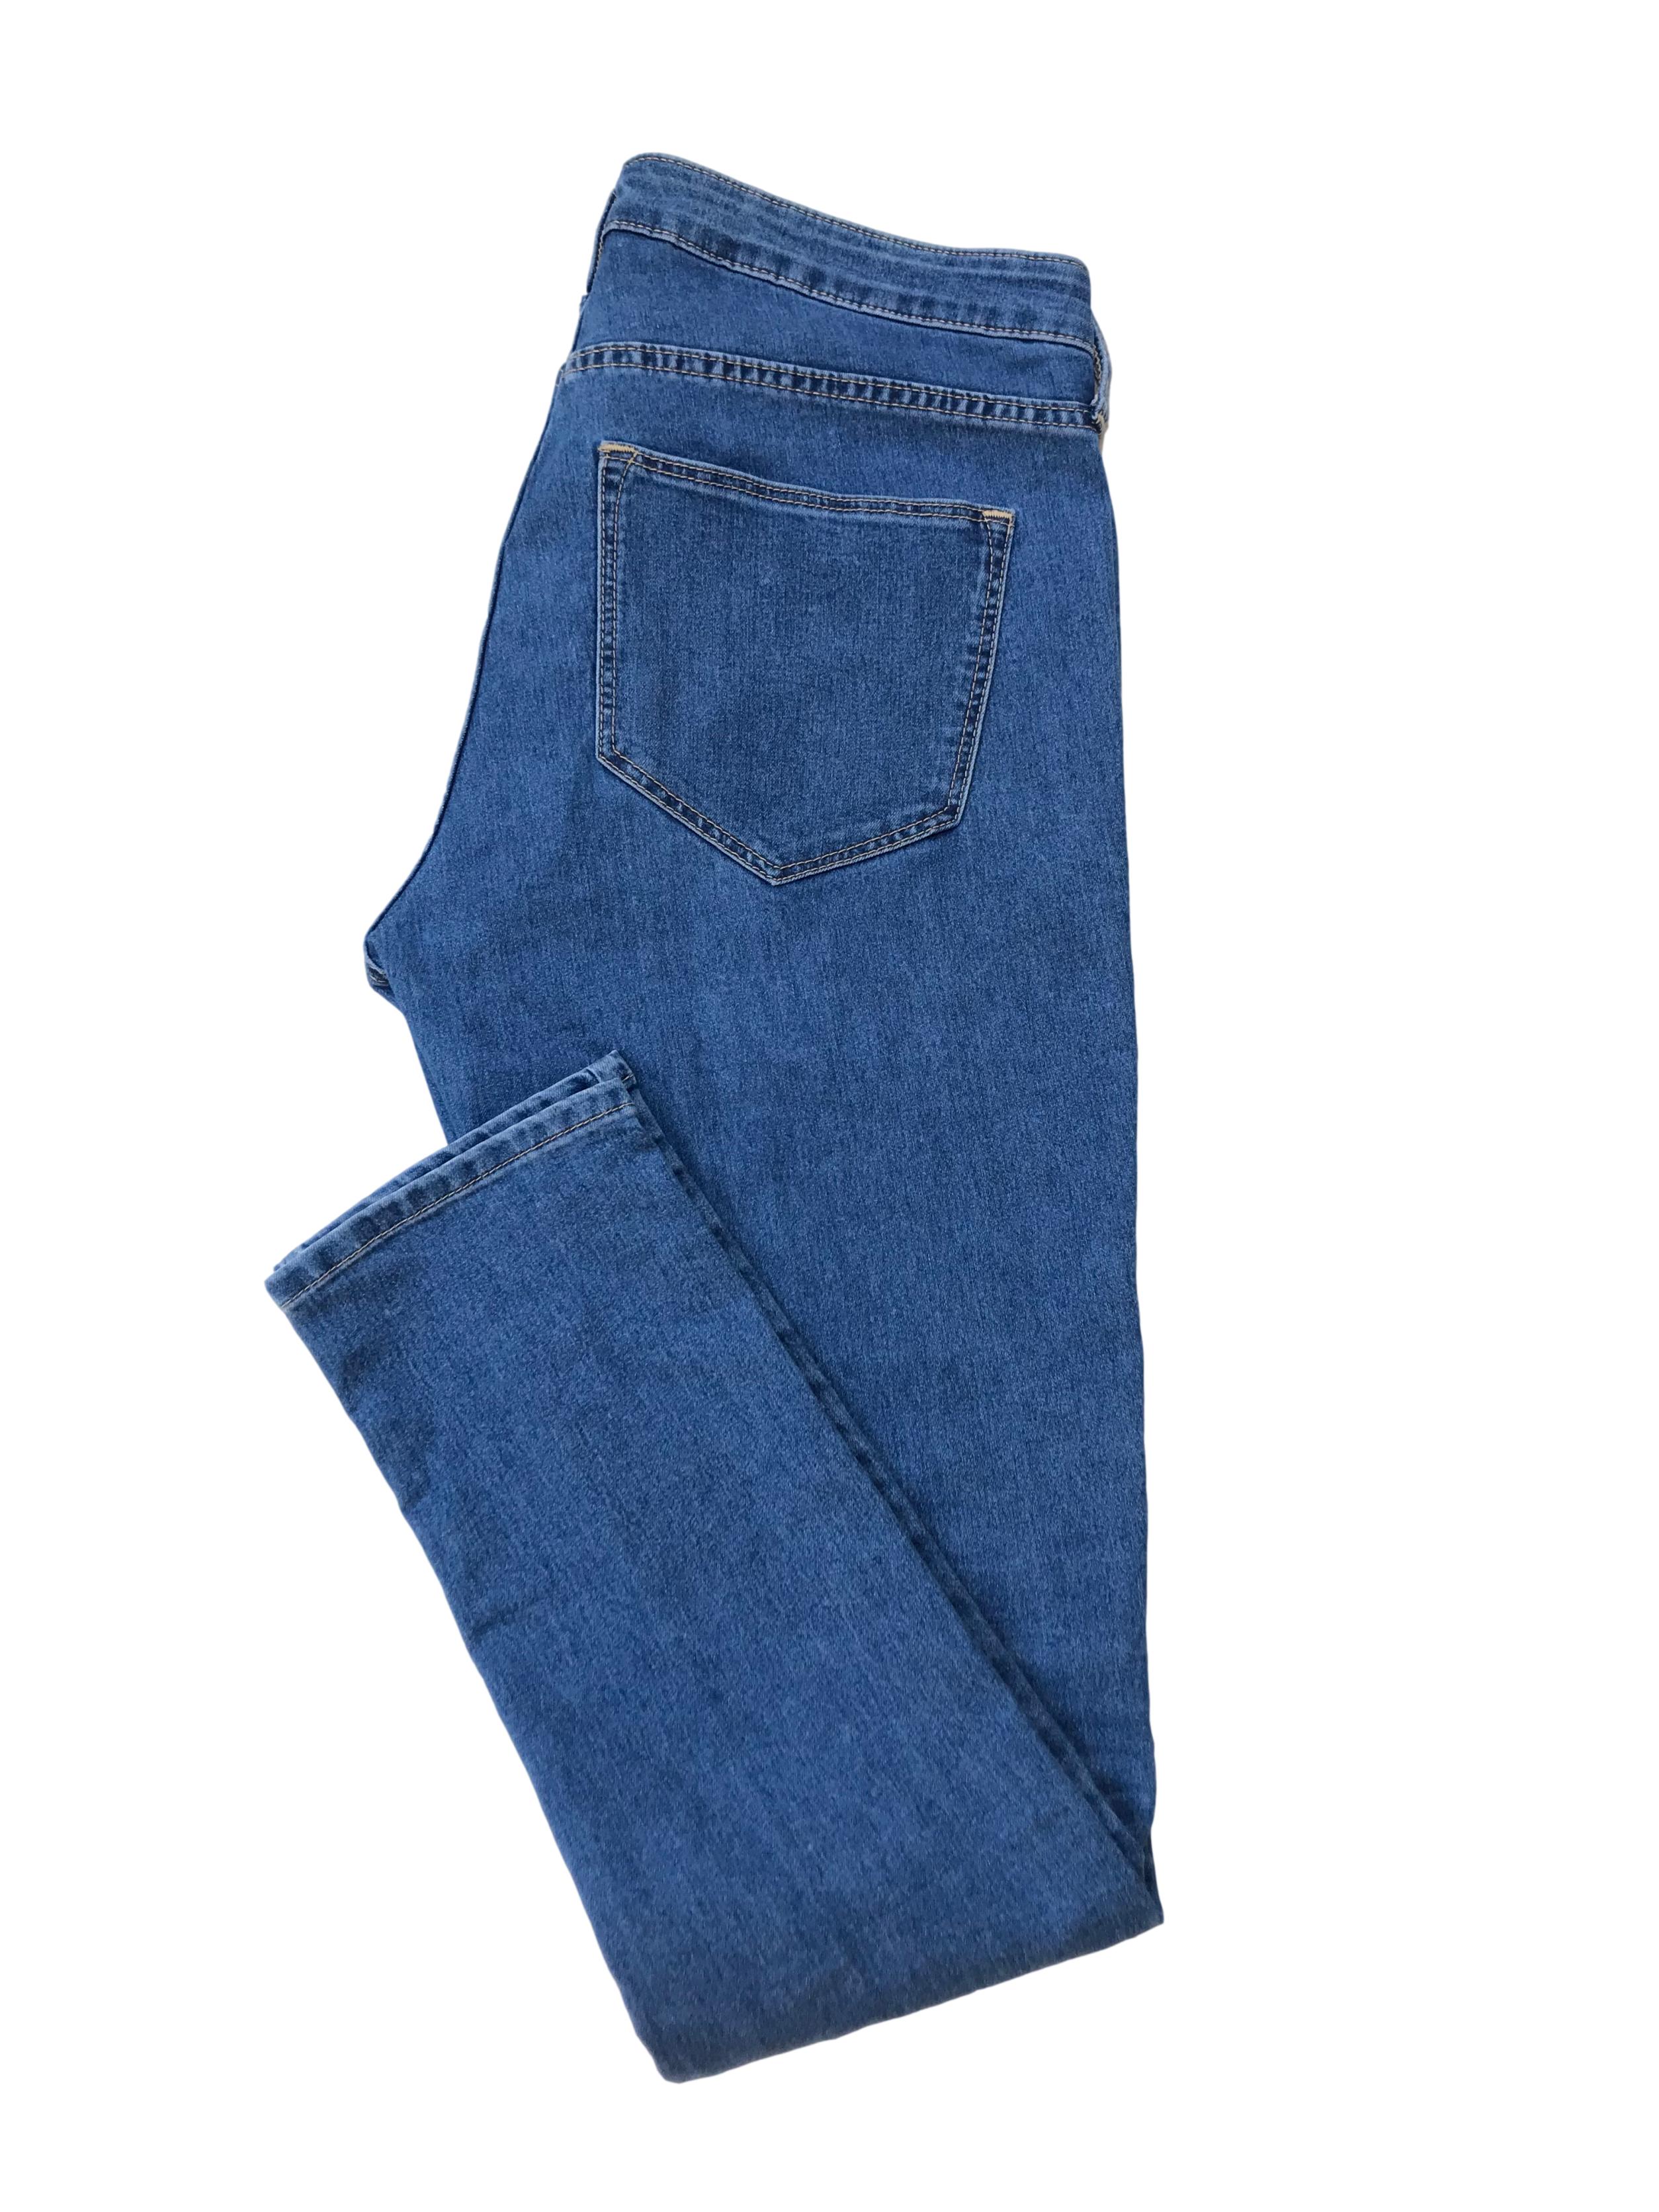 Jegging H&M azul con bolsillos traseros, regular waist. Pretina 86cm 